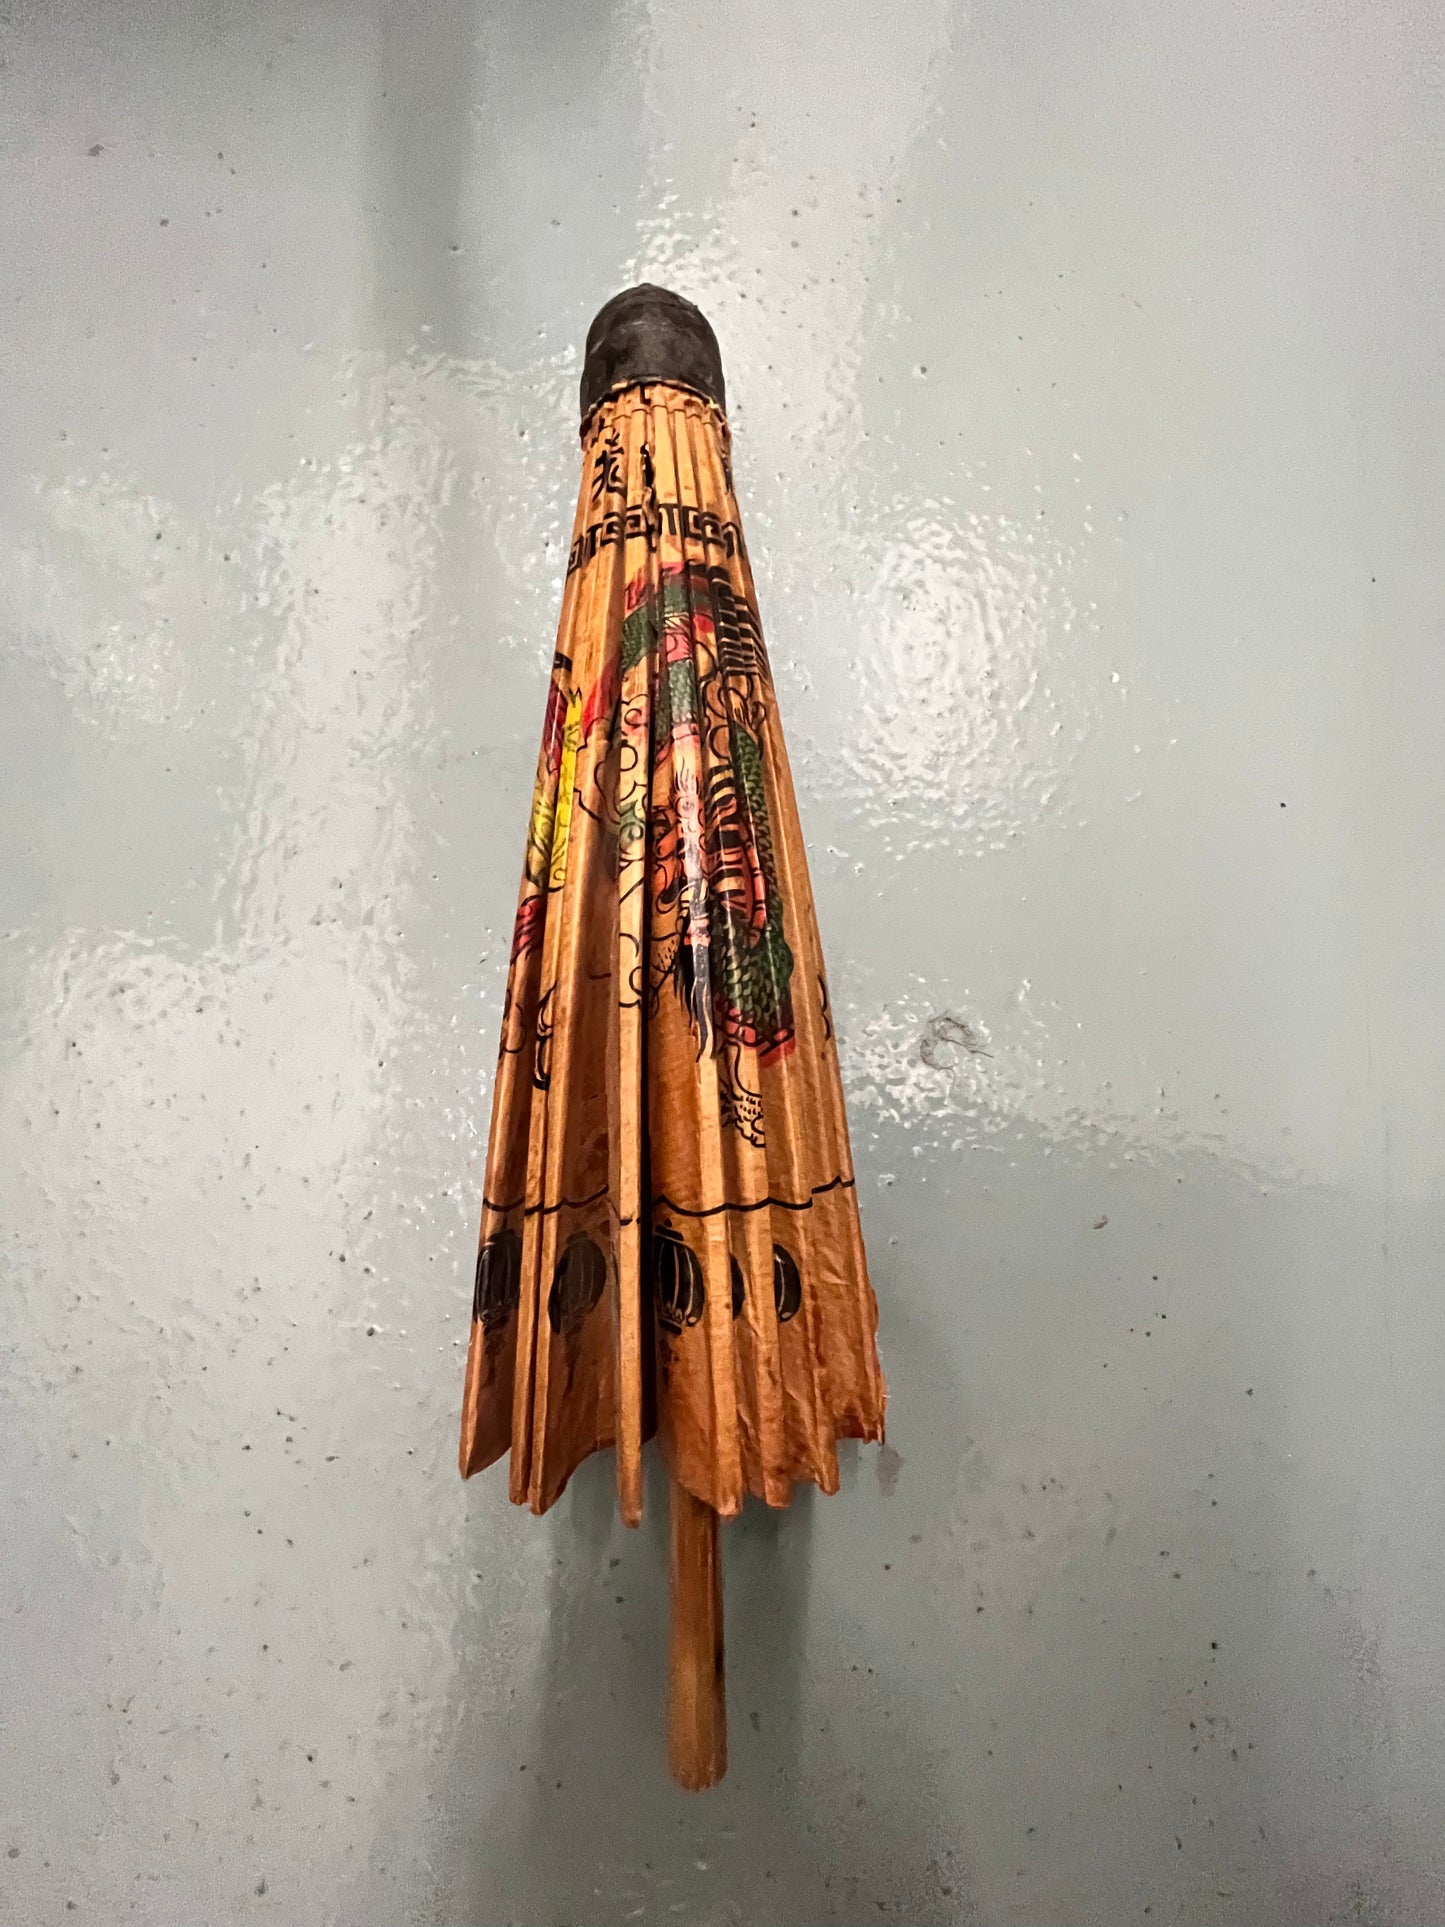 MAD MEN: Betty’s Vintage Wood Umbrella